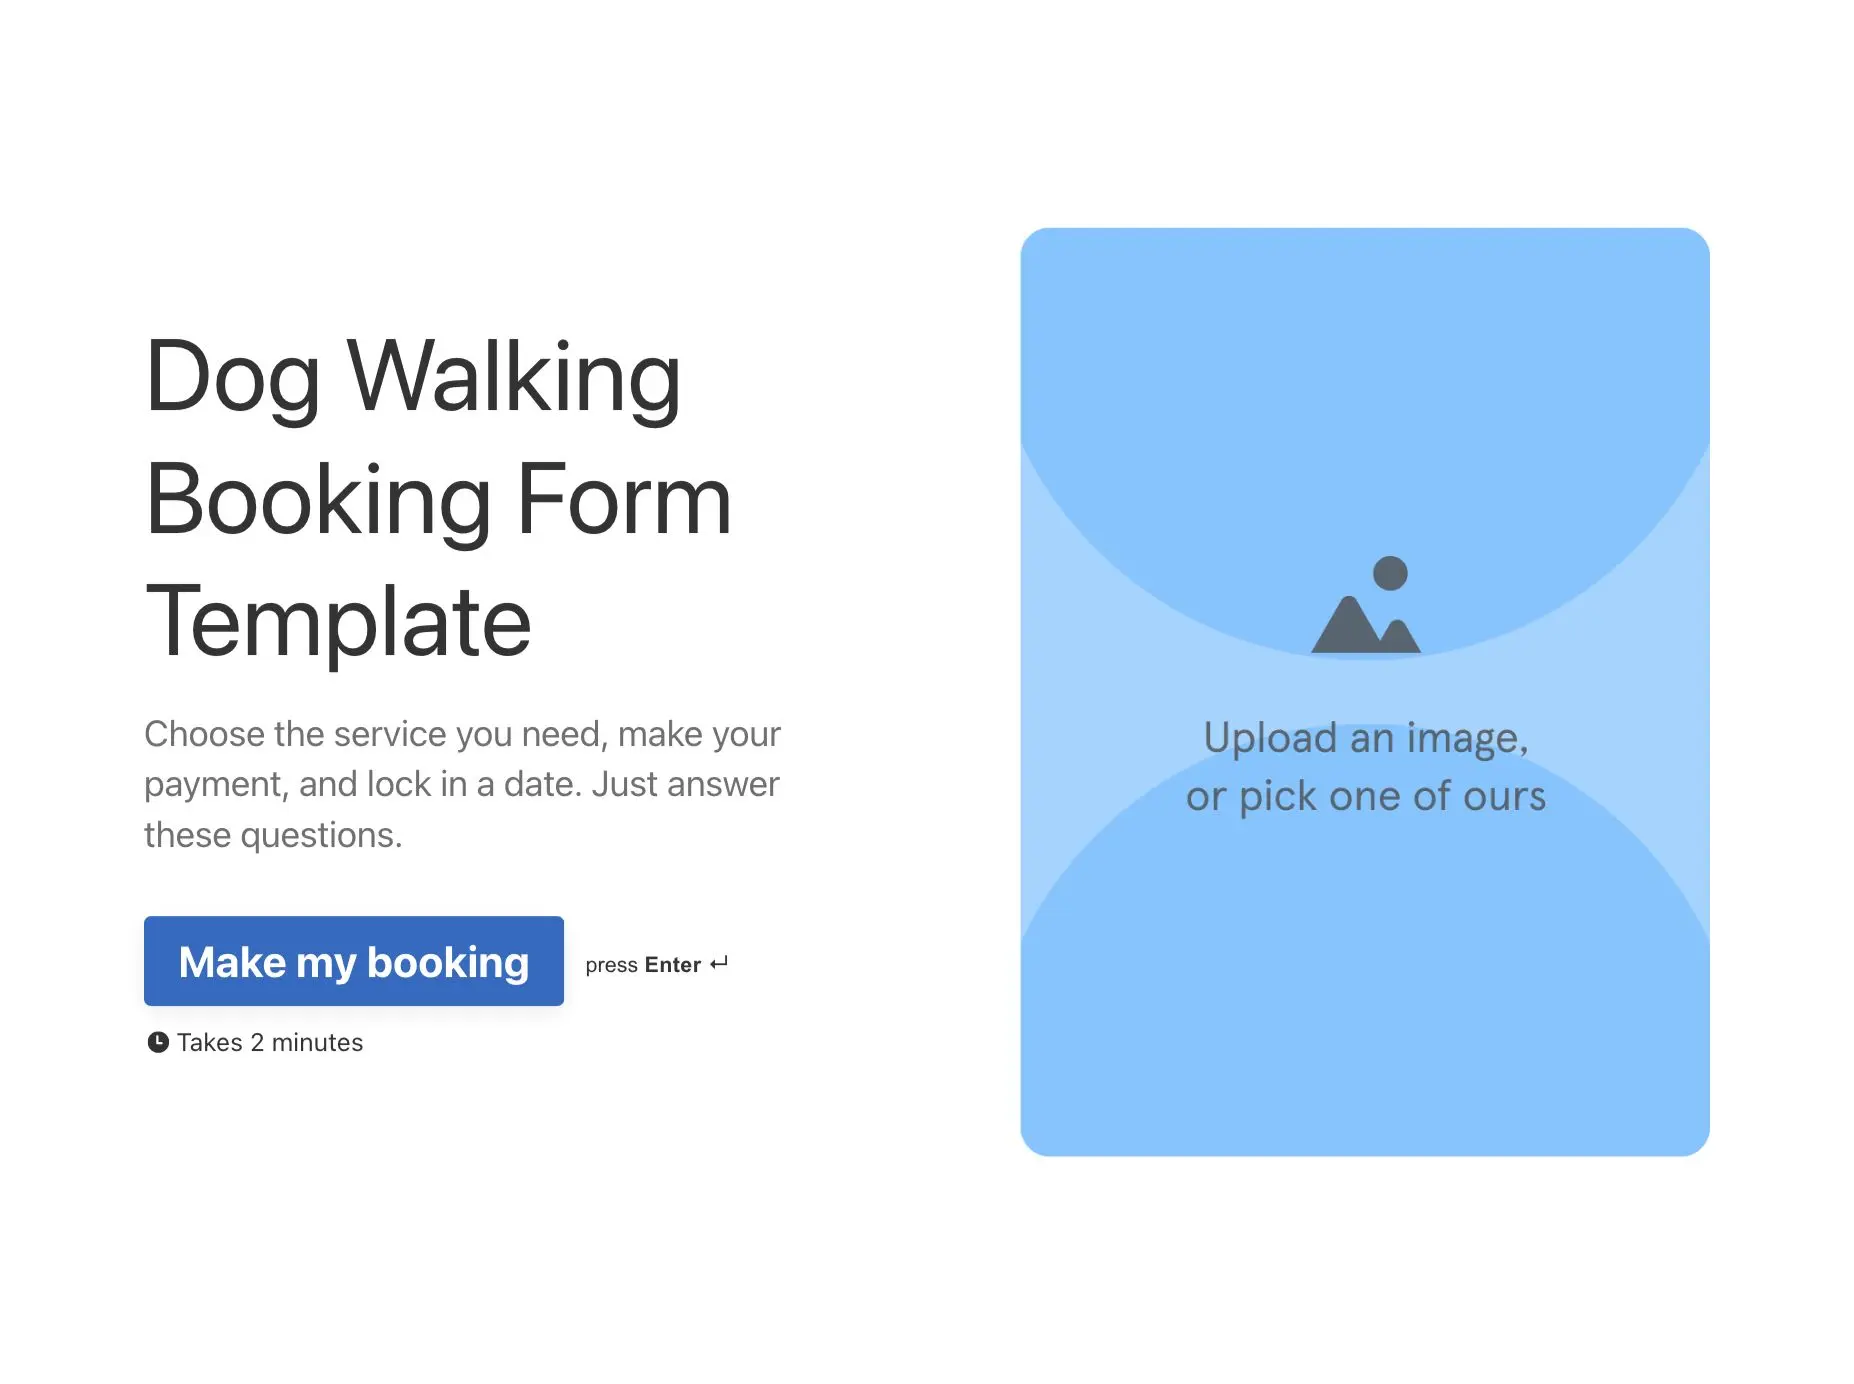 Dog walking booking form template Hero